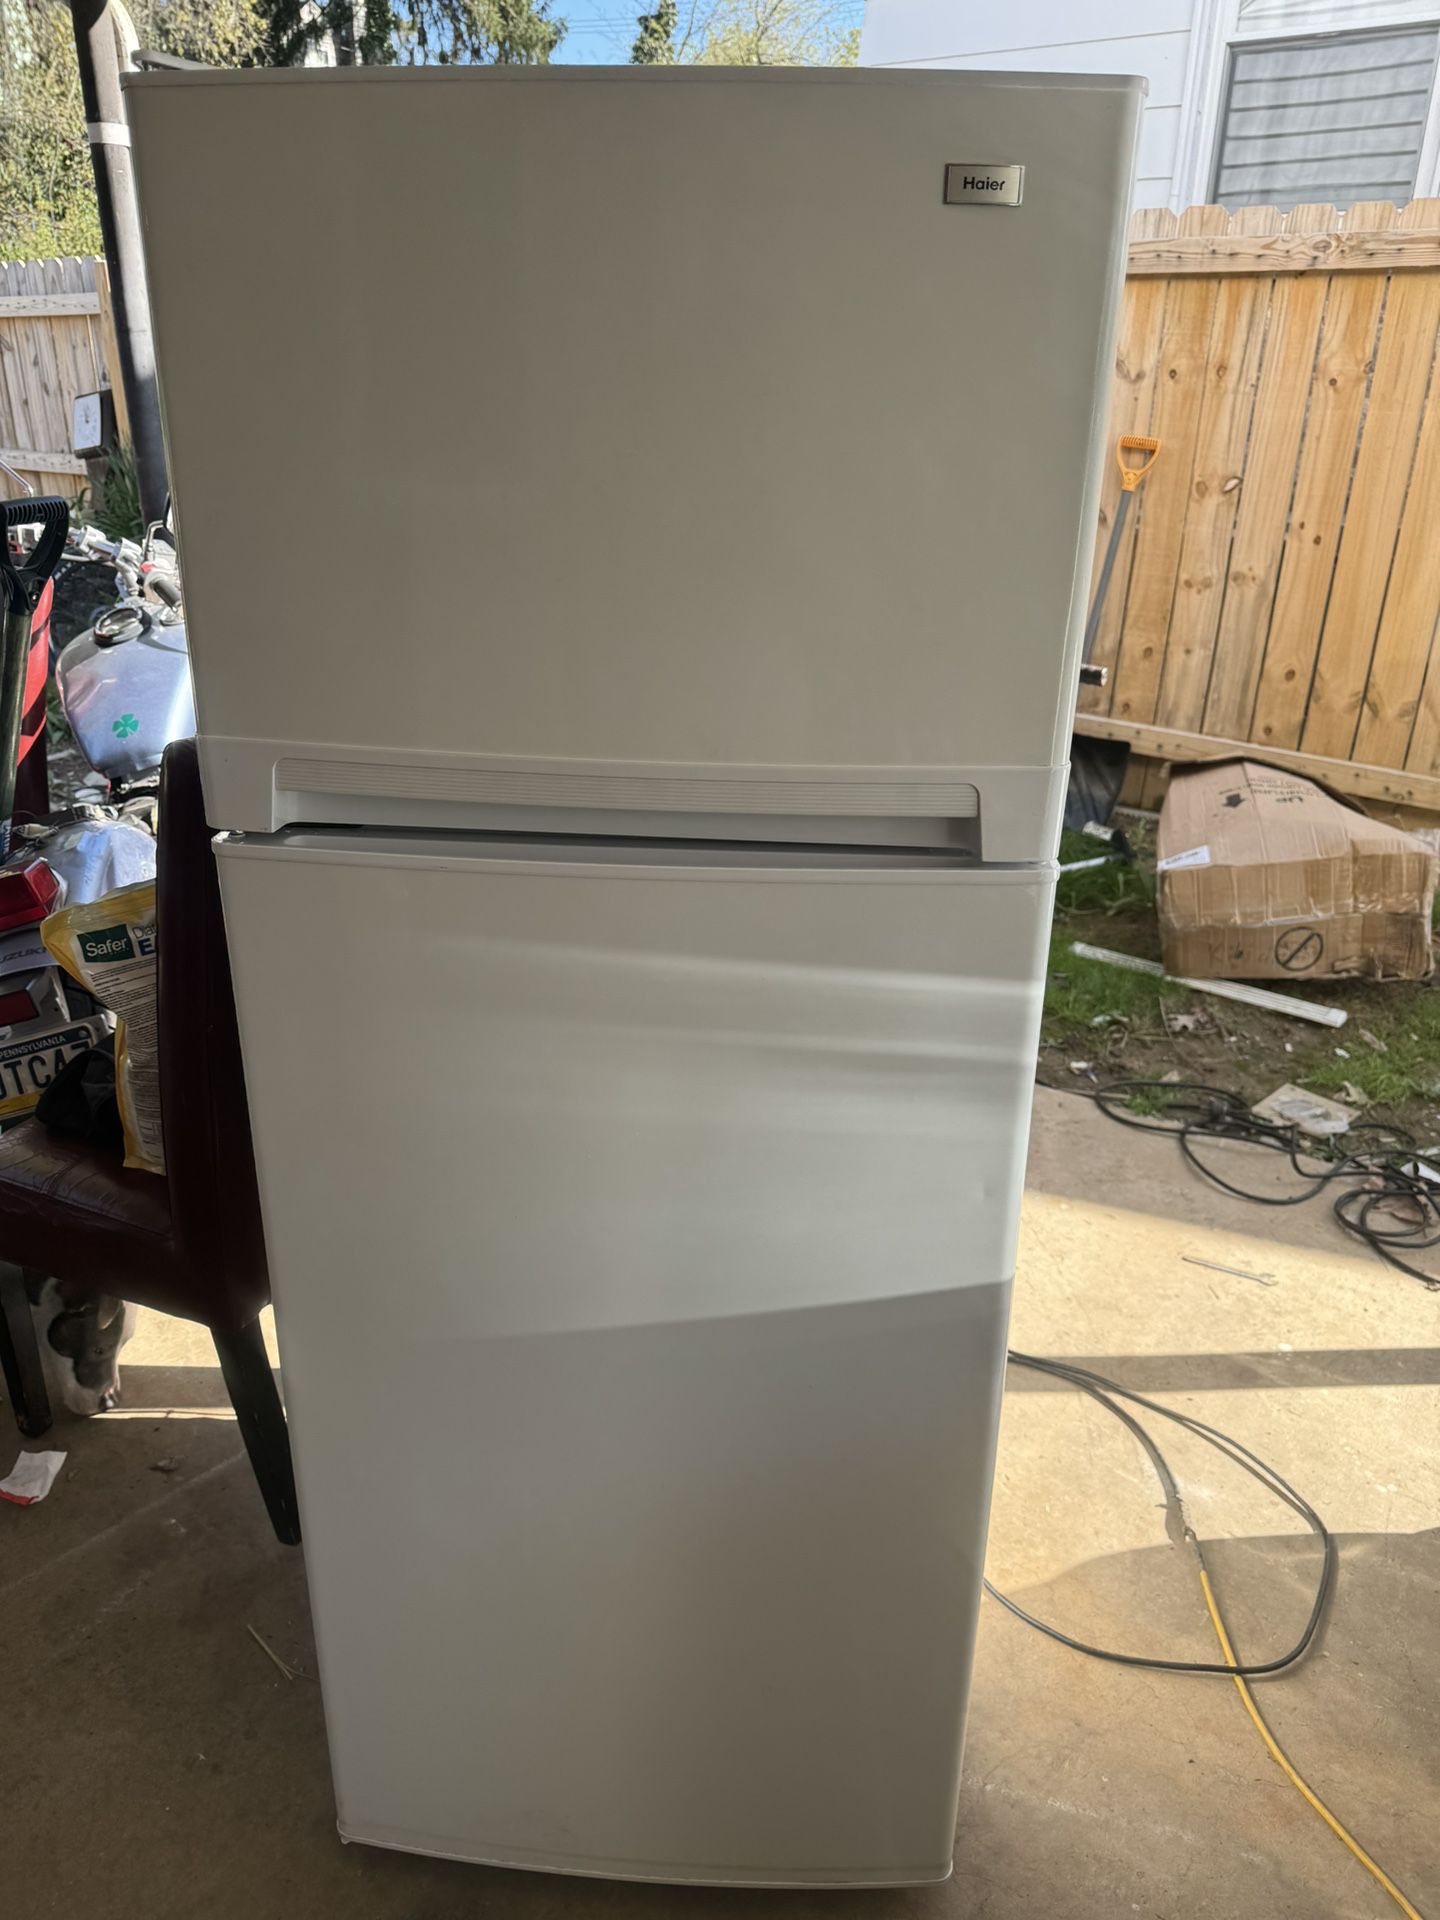 Refrigerator Apartment Size 10 Cubic 